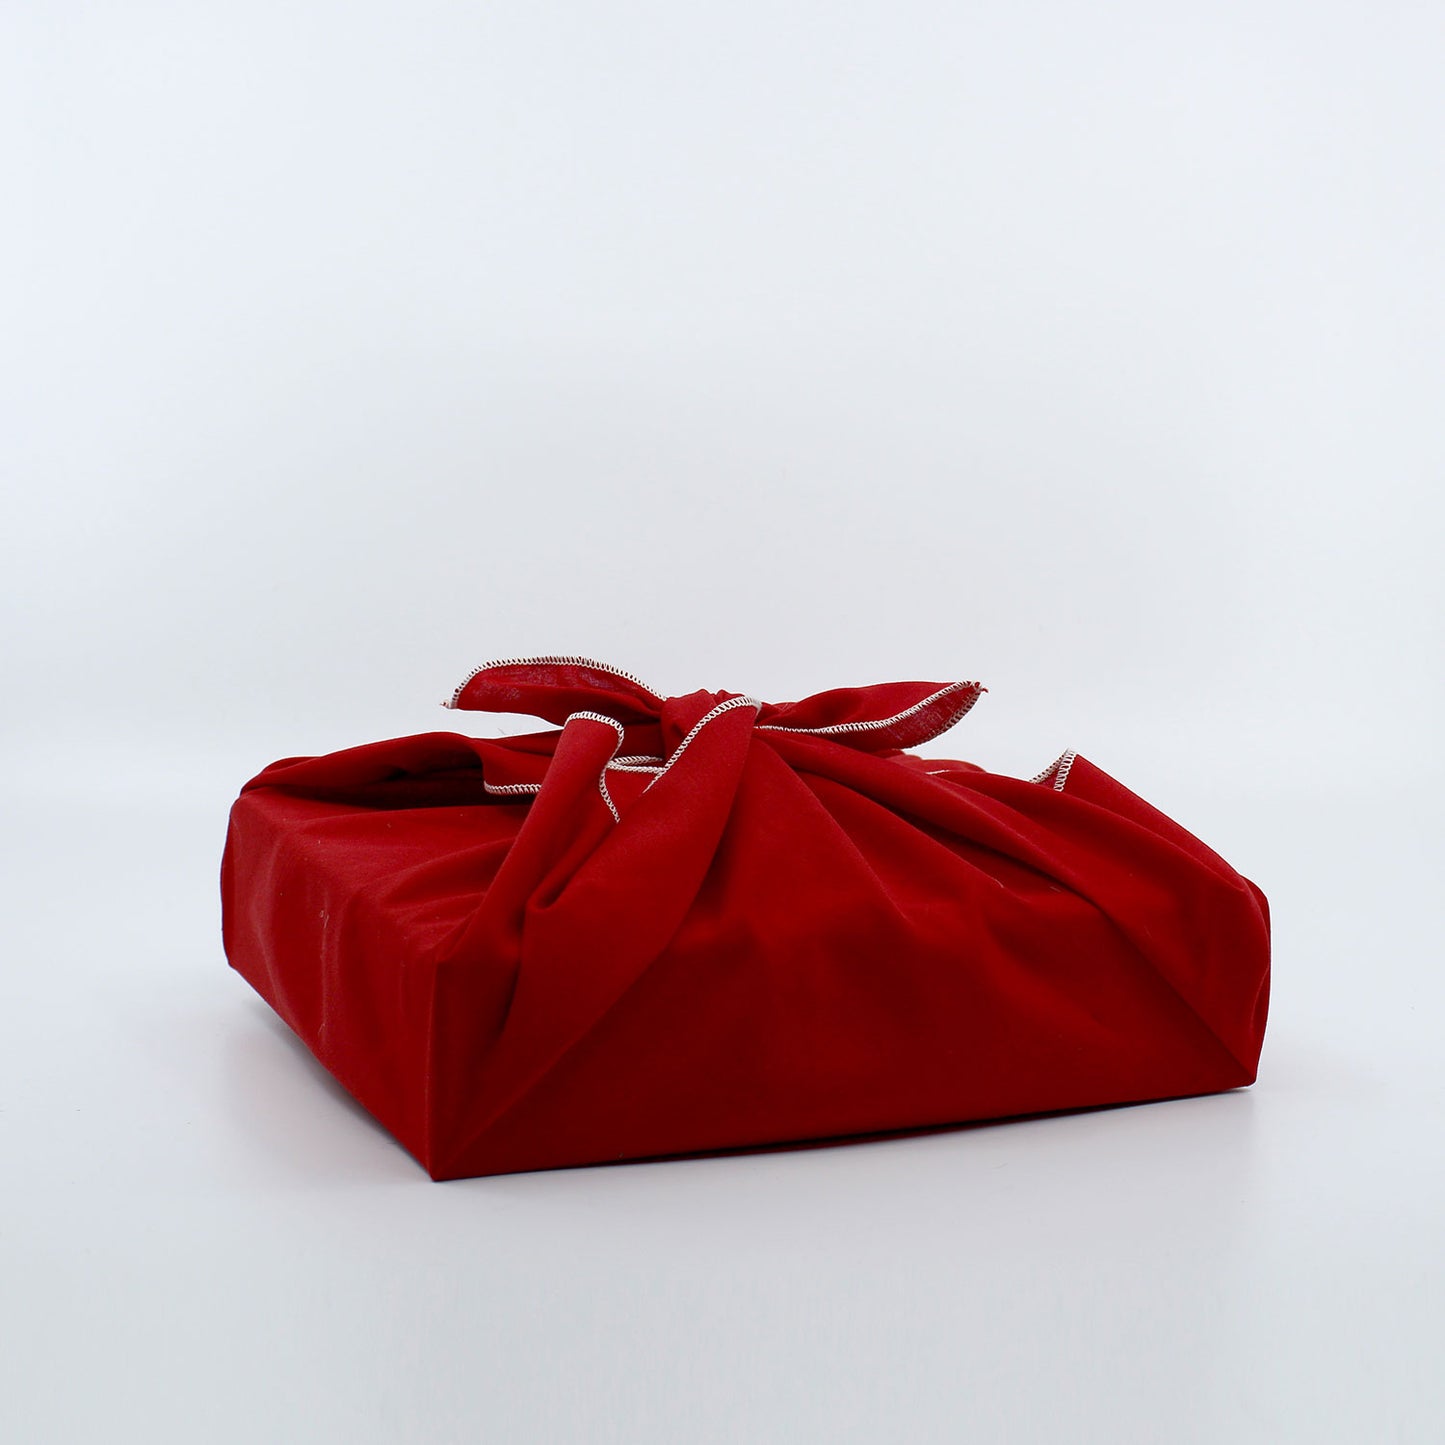 Emballage cadeau réutilisable de style furoshiki